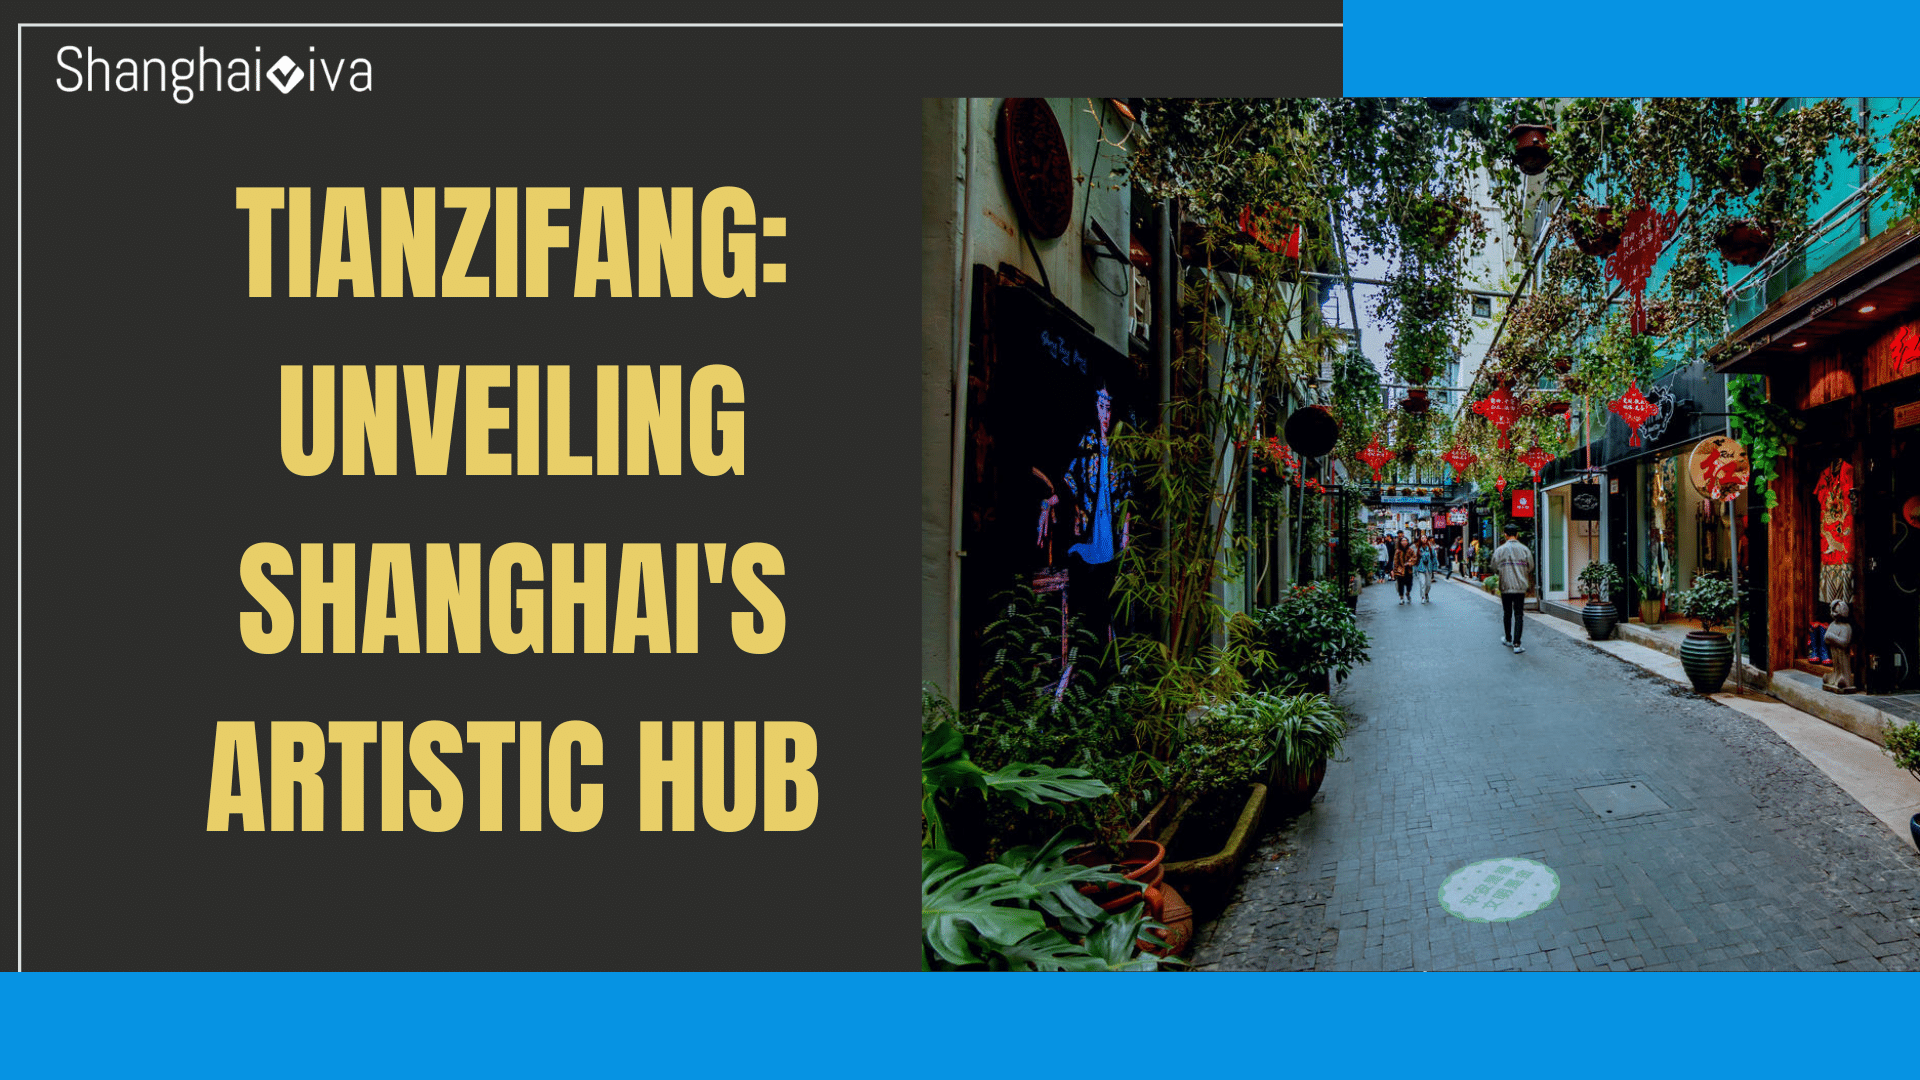 Tianzifang: Unveiling Shanghai’s Artistic Hub